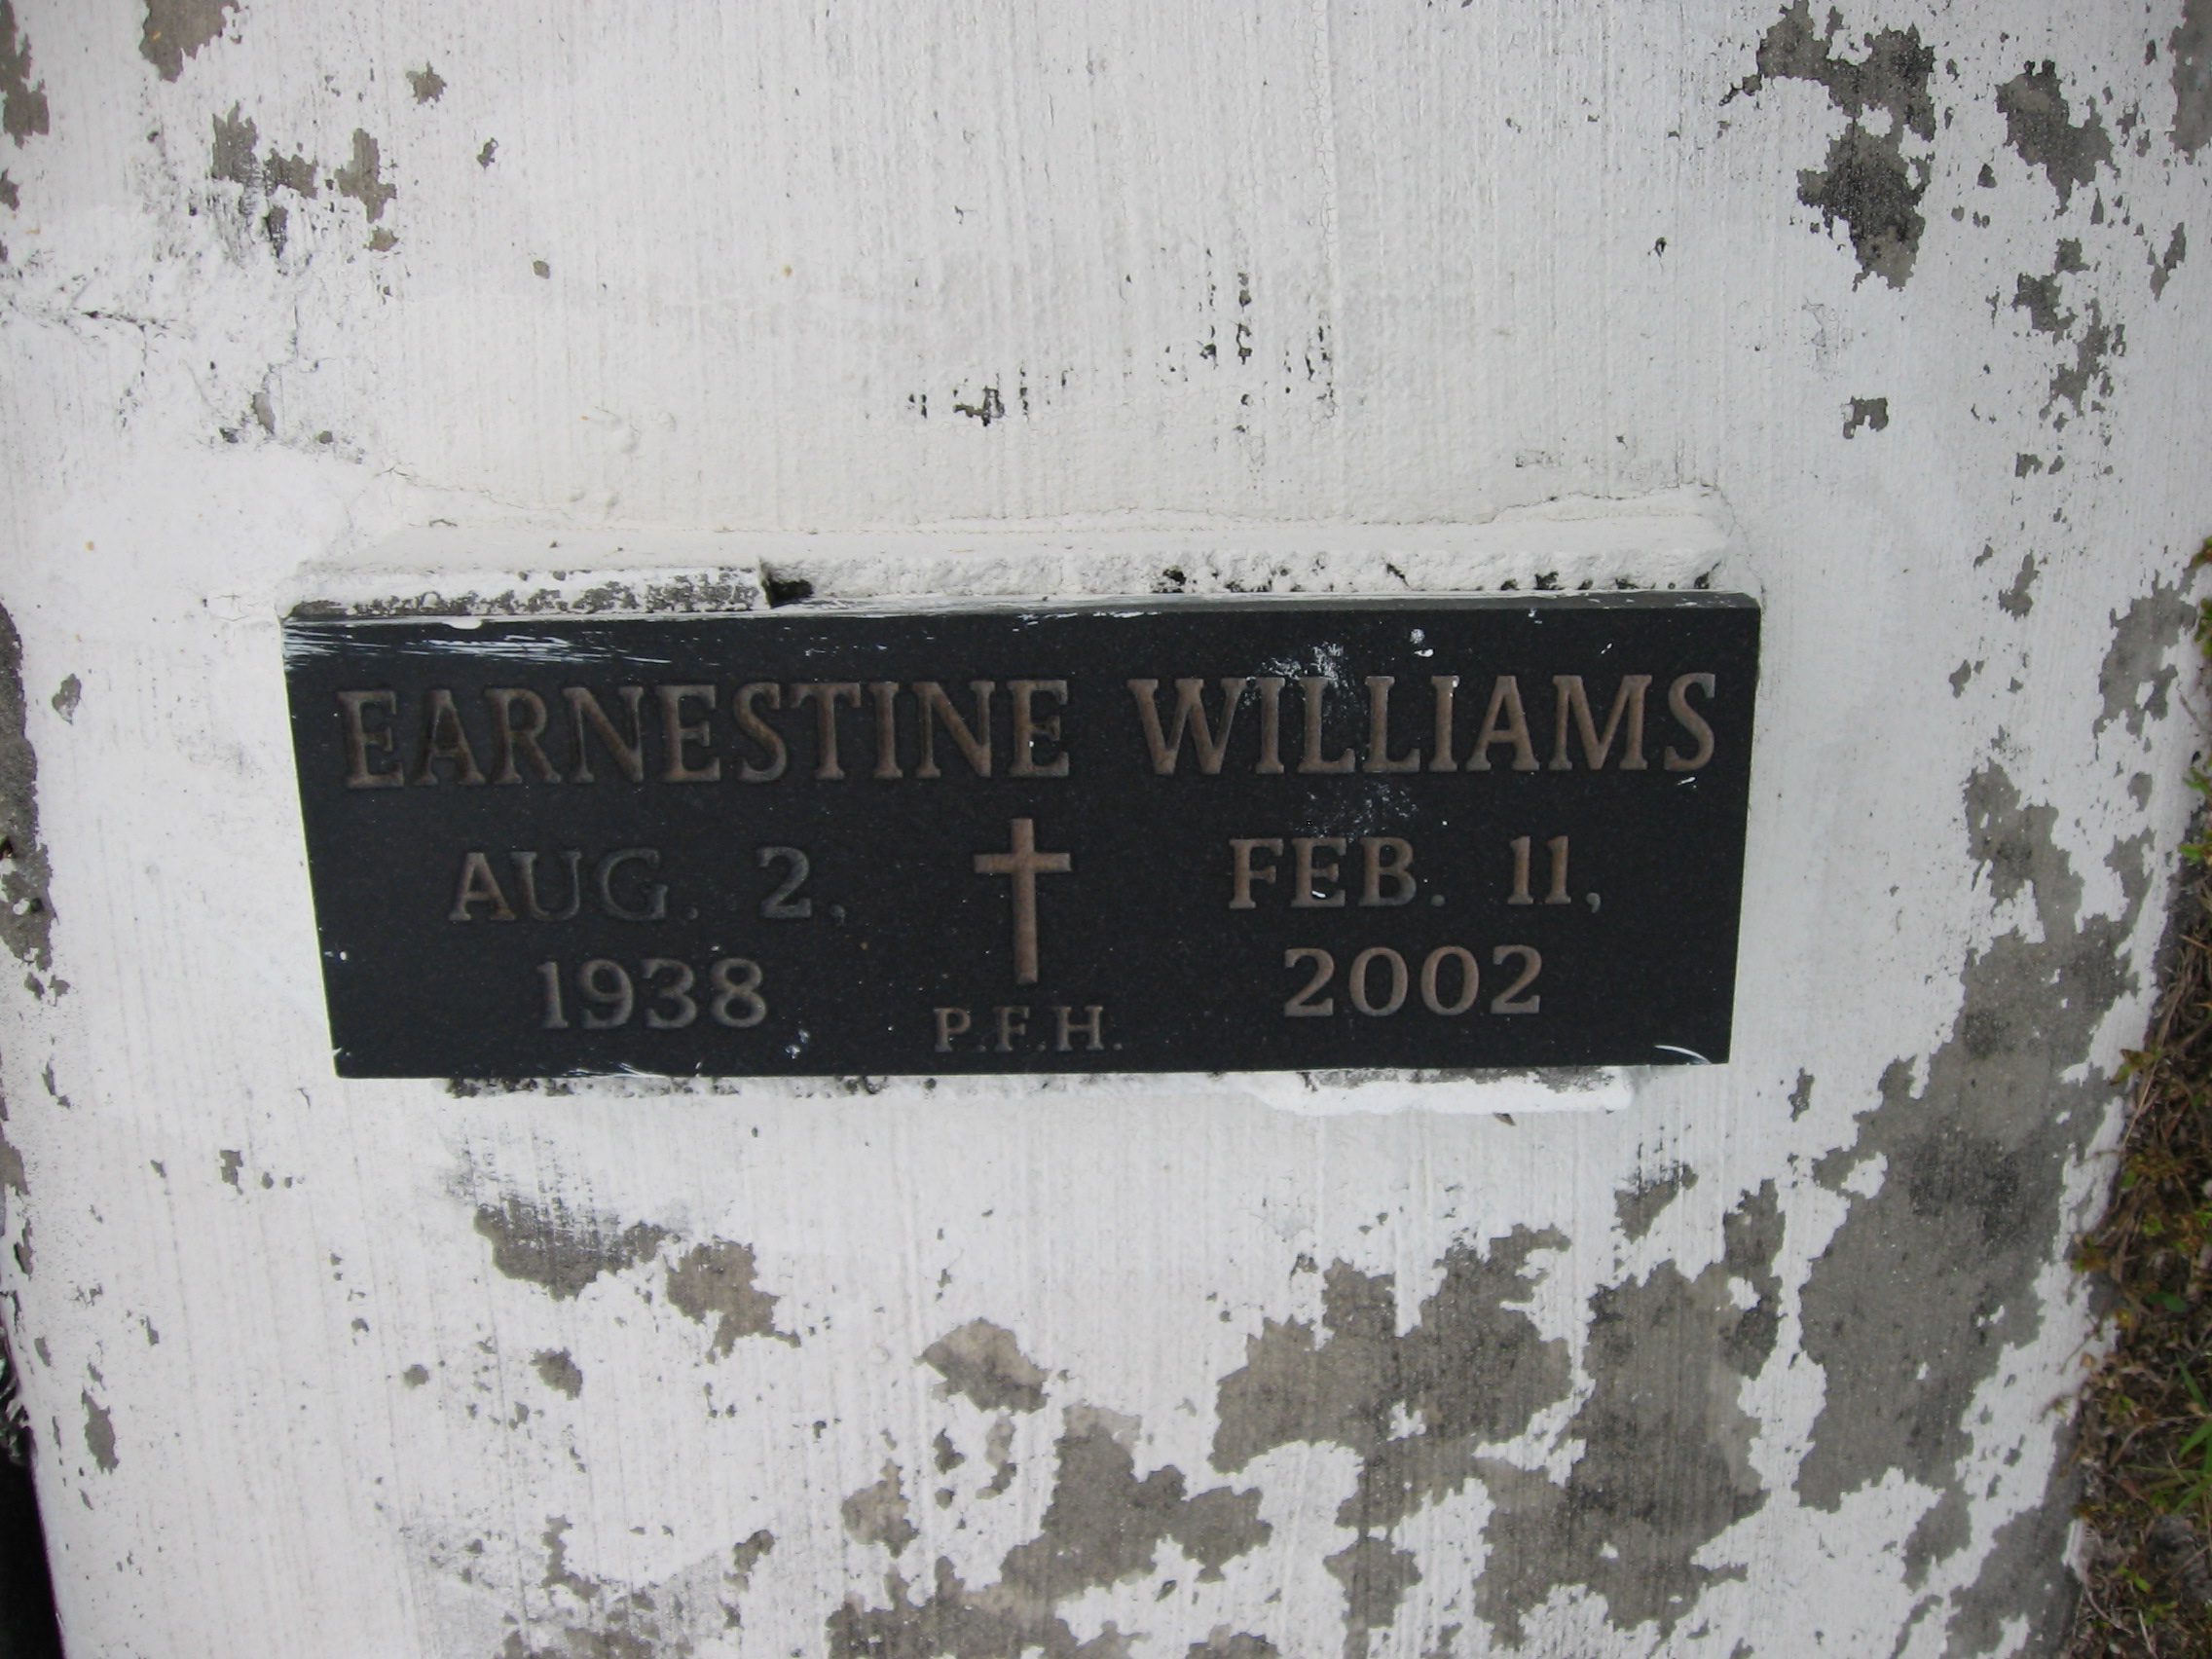 Earnestine Williams